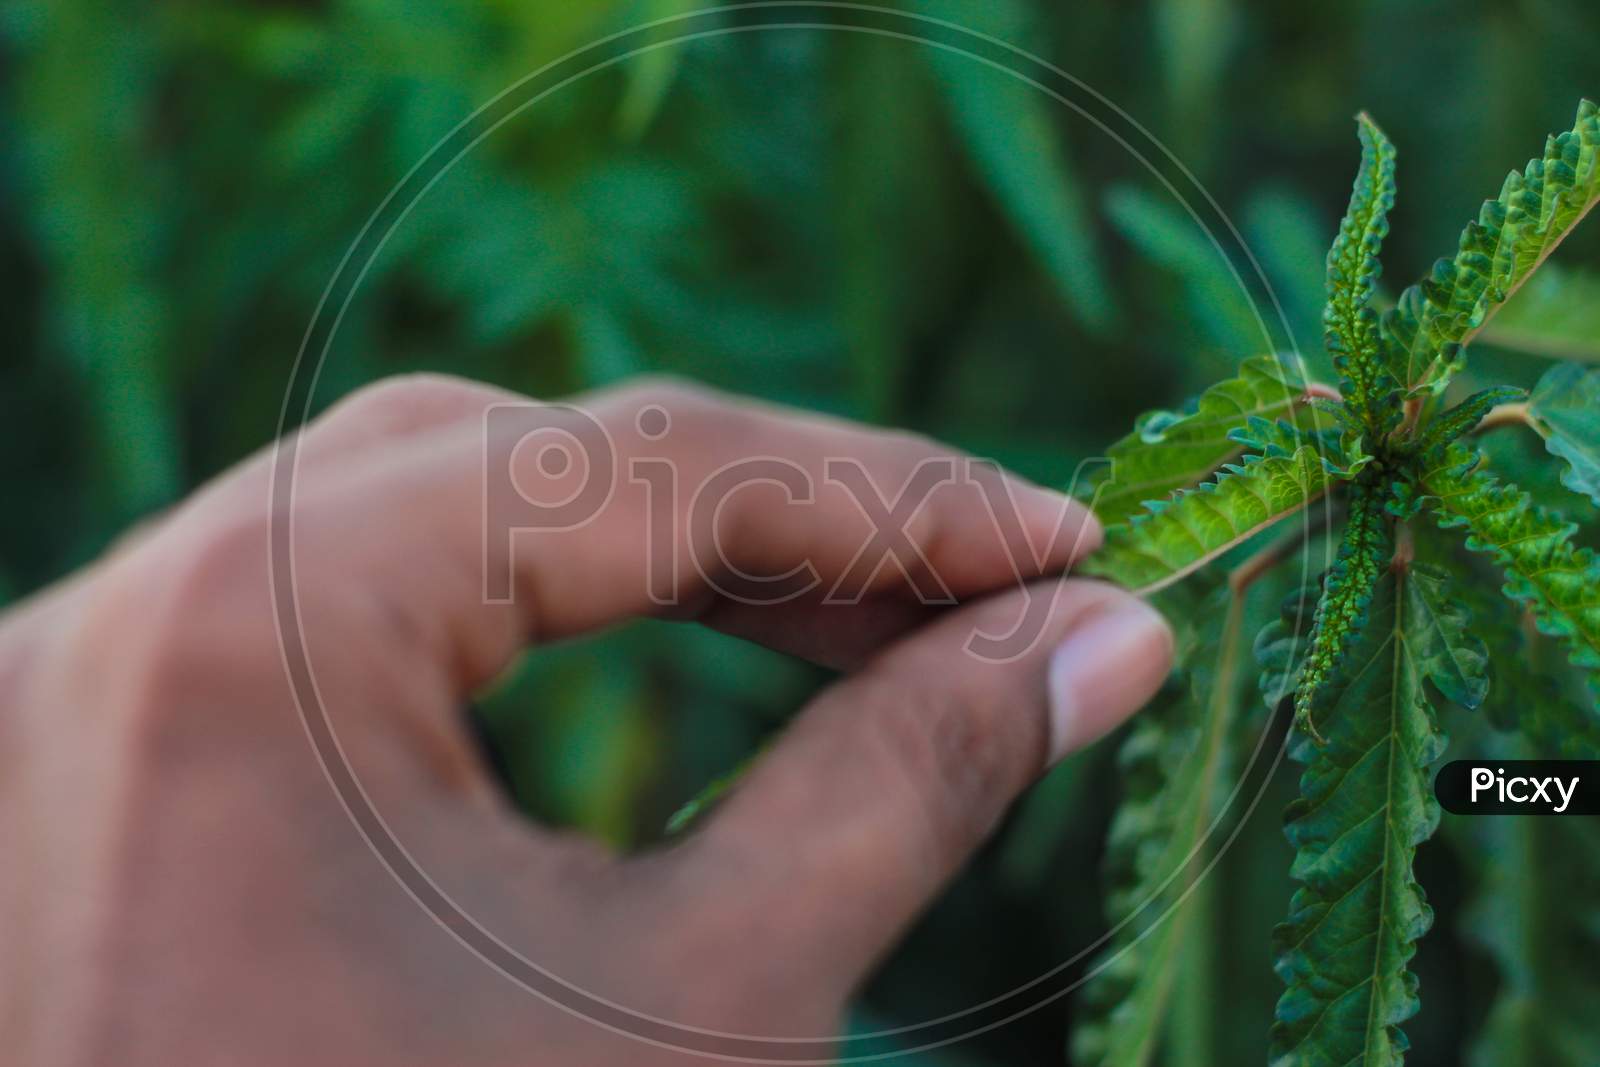 hand holding green leaf